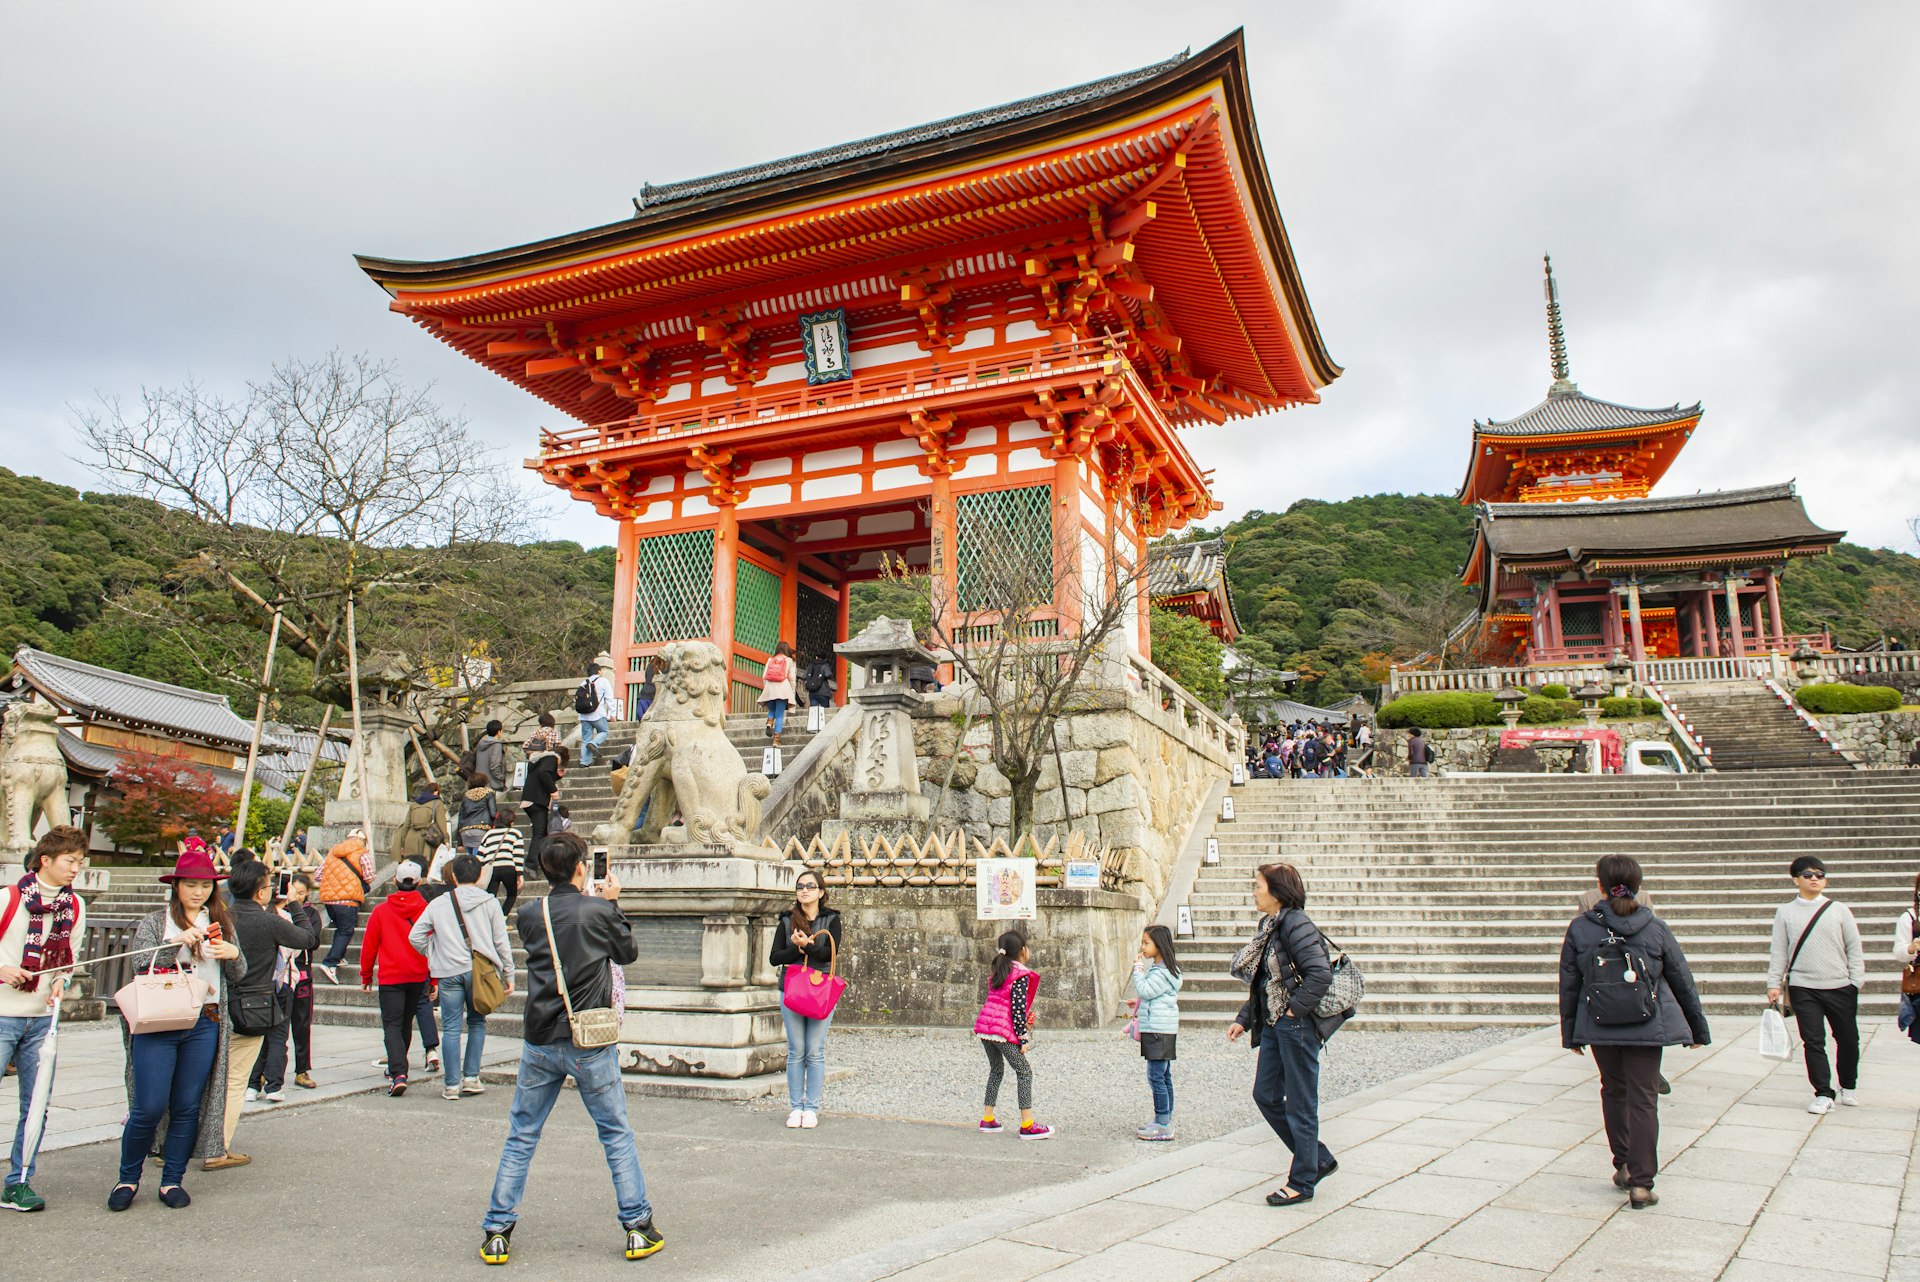 Autumn tourists sightseeing and taking photos of Kiyomizu-dera in Kyoto, Japan